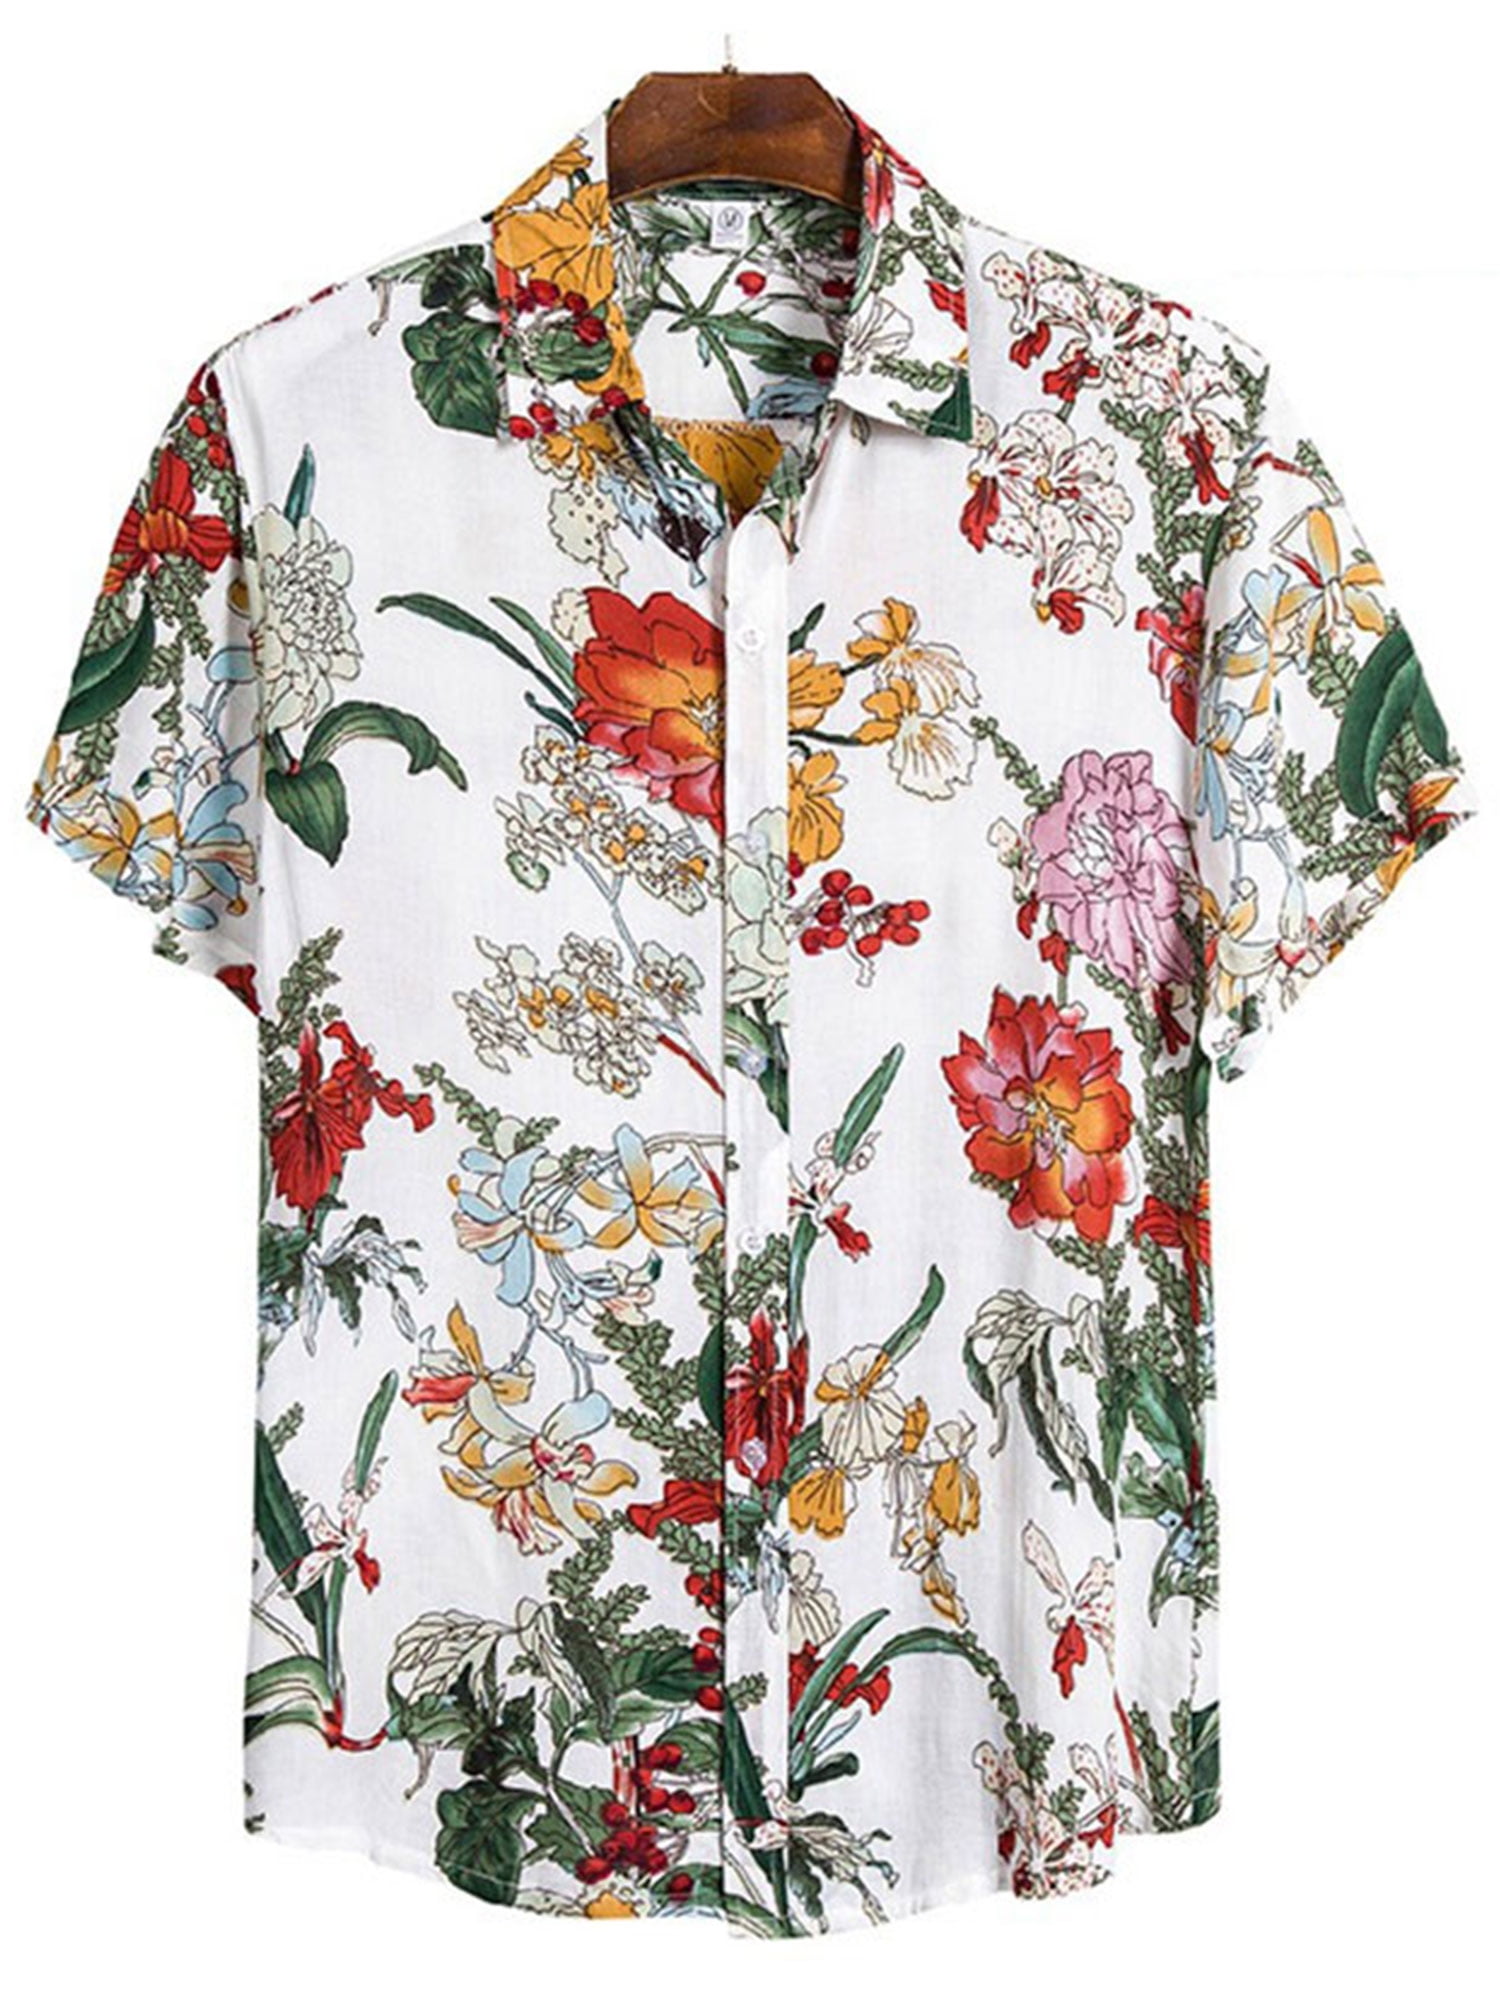 GAGA Men Fashion Short Sleeve Casual Western Plaid Buttons Shirt Button Down Shirts